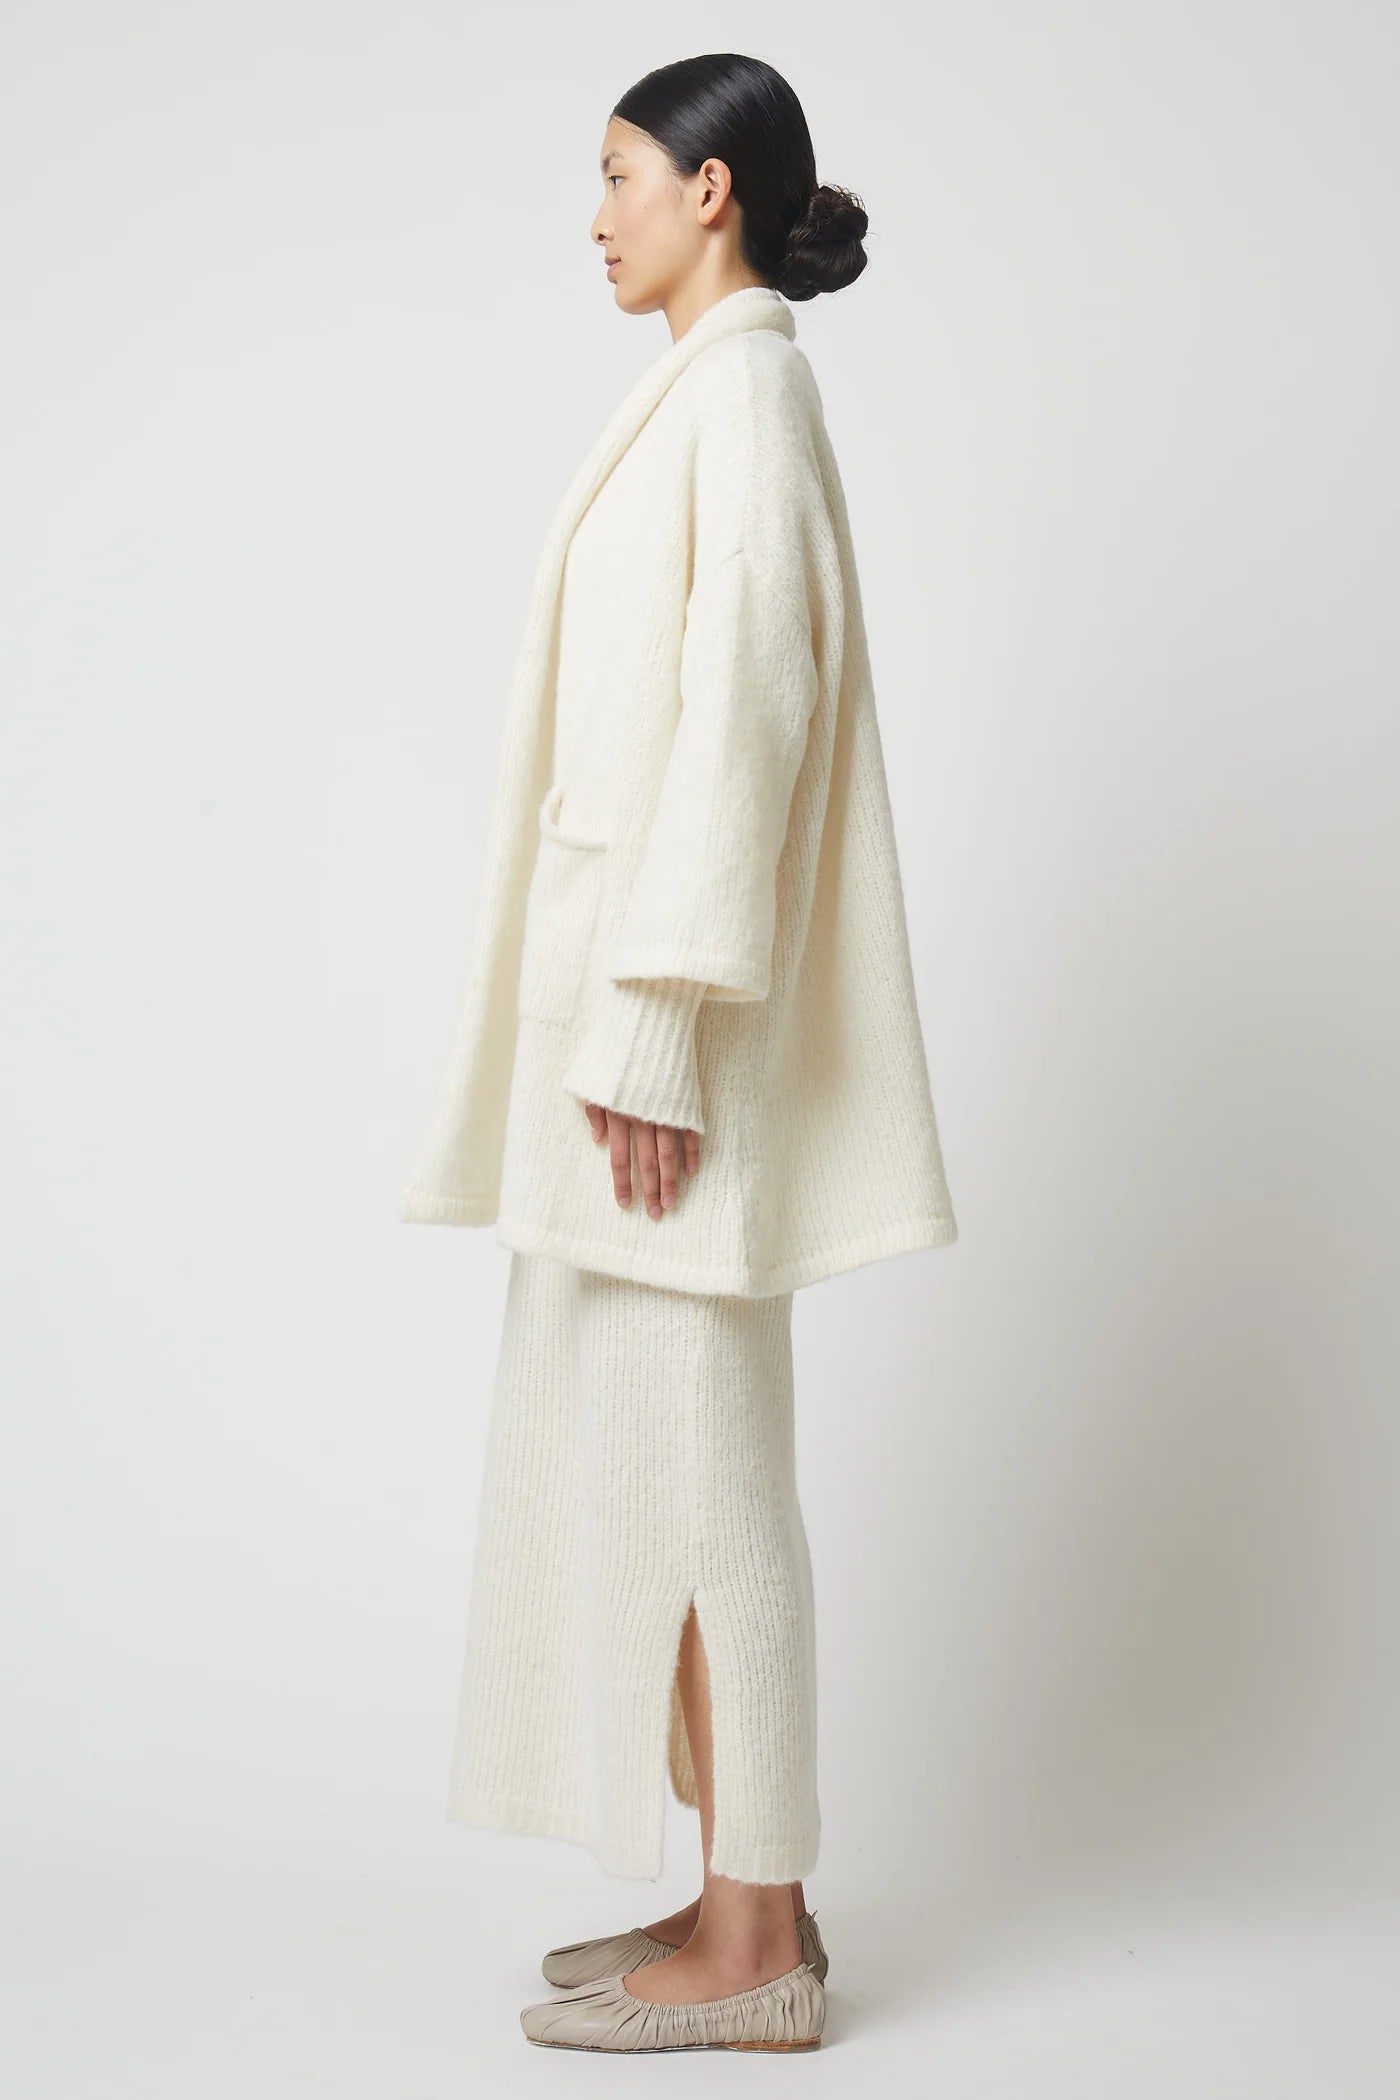 Atelier Delphine | Haori Coat in Baby Alpaca - Midnight